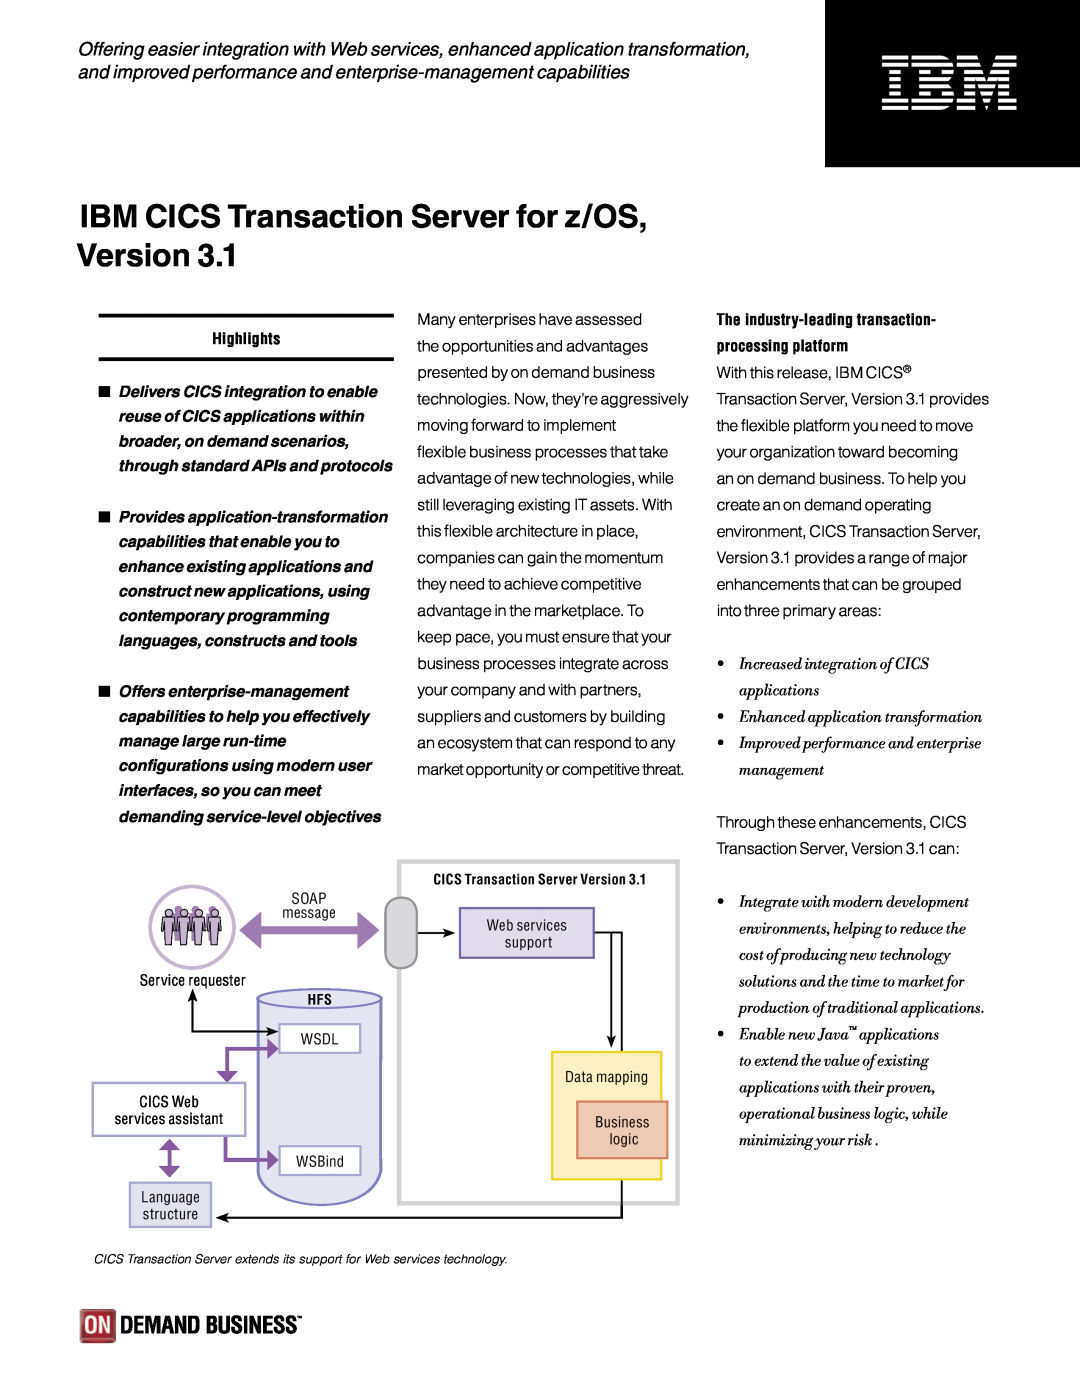 IBM 3.1 manual Highlights, Increased integration of CICS applications, Enhanced application transformation 